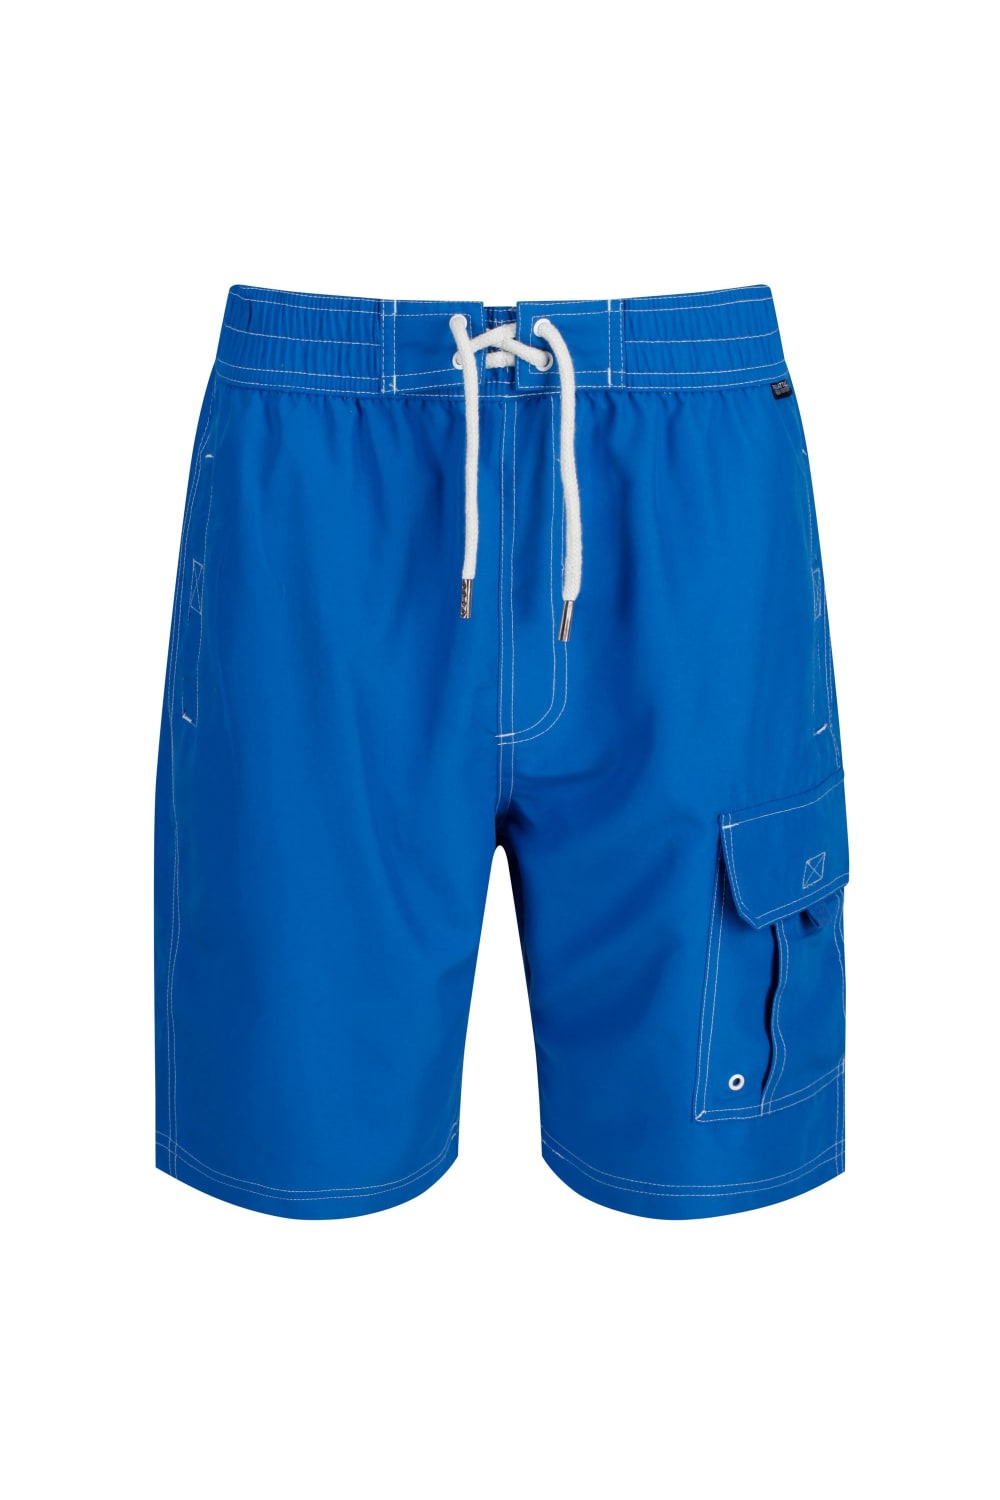 Regatta Mens Hotham III Mesh Quick Drying Board Shorts (Oxford Blue)